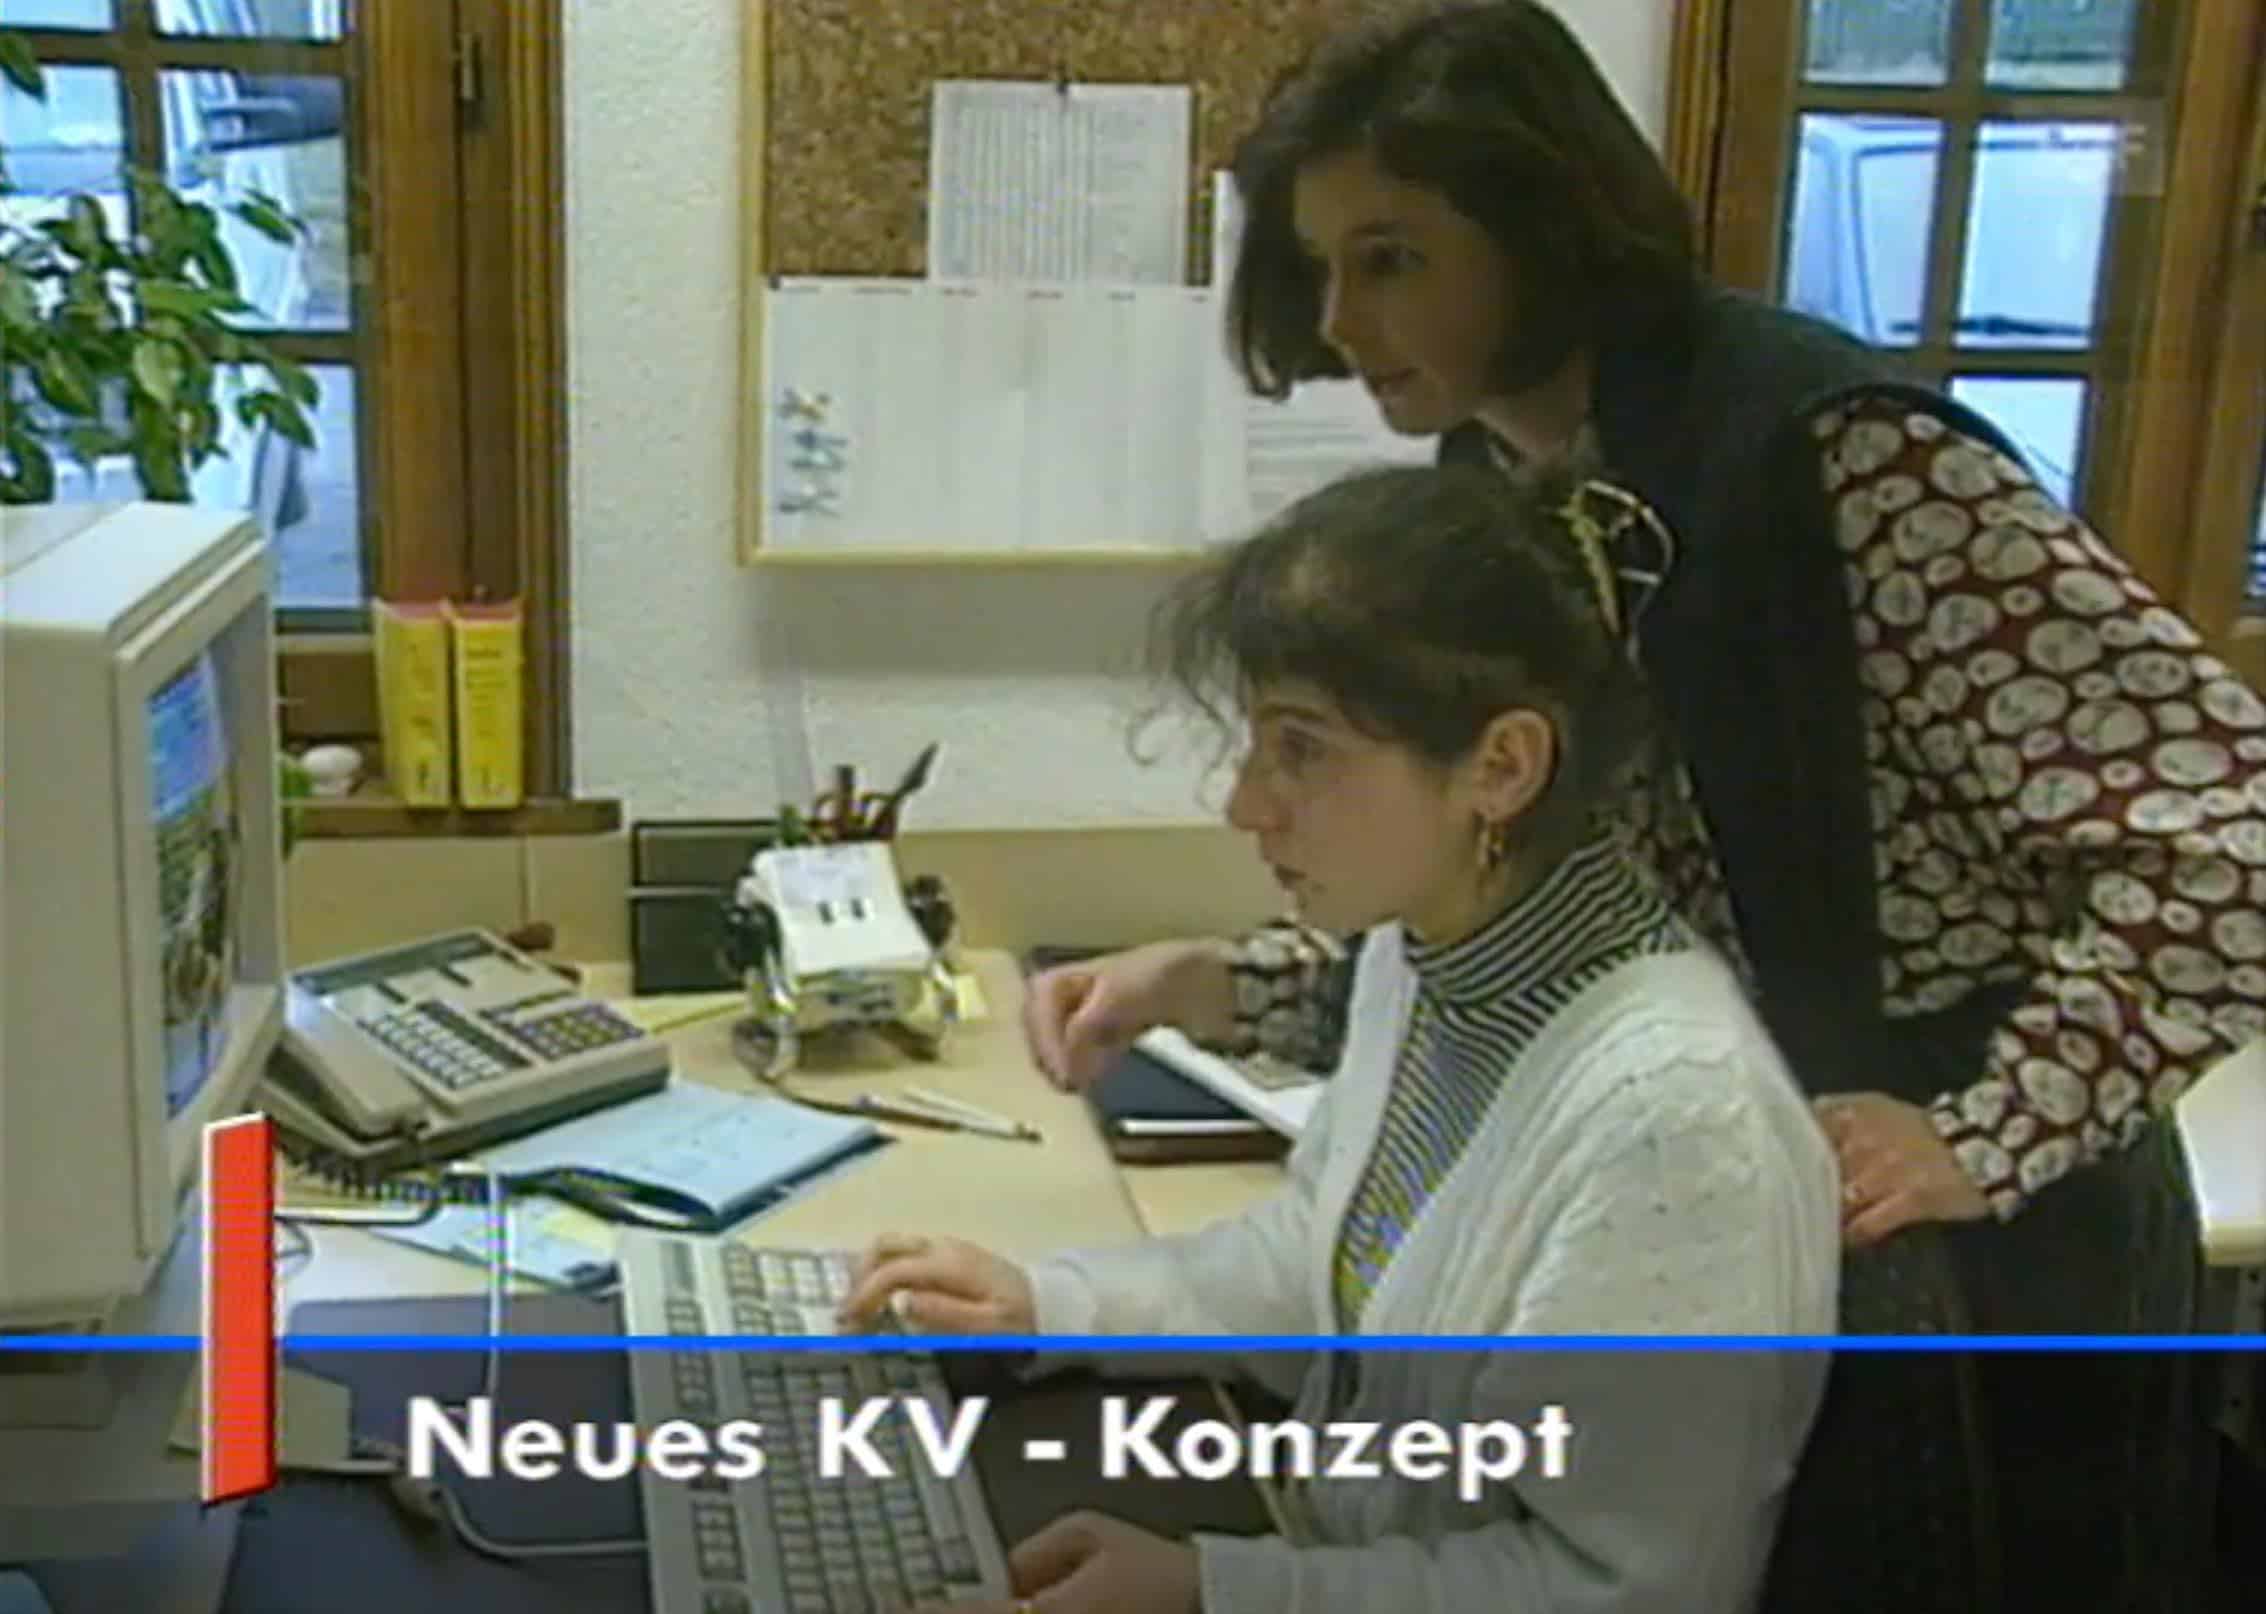 1996-vd-reform-kv-lehre-thumbnail.jpg